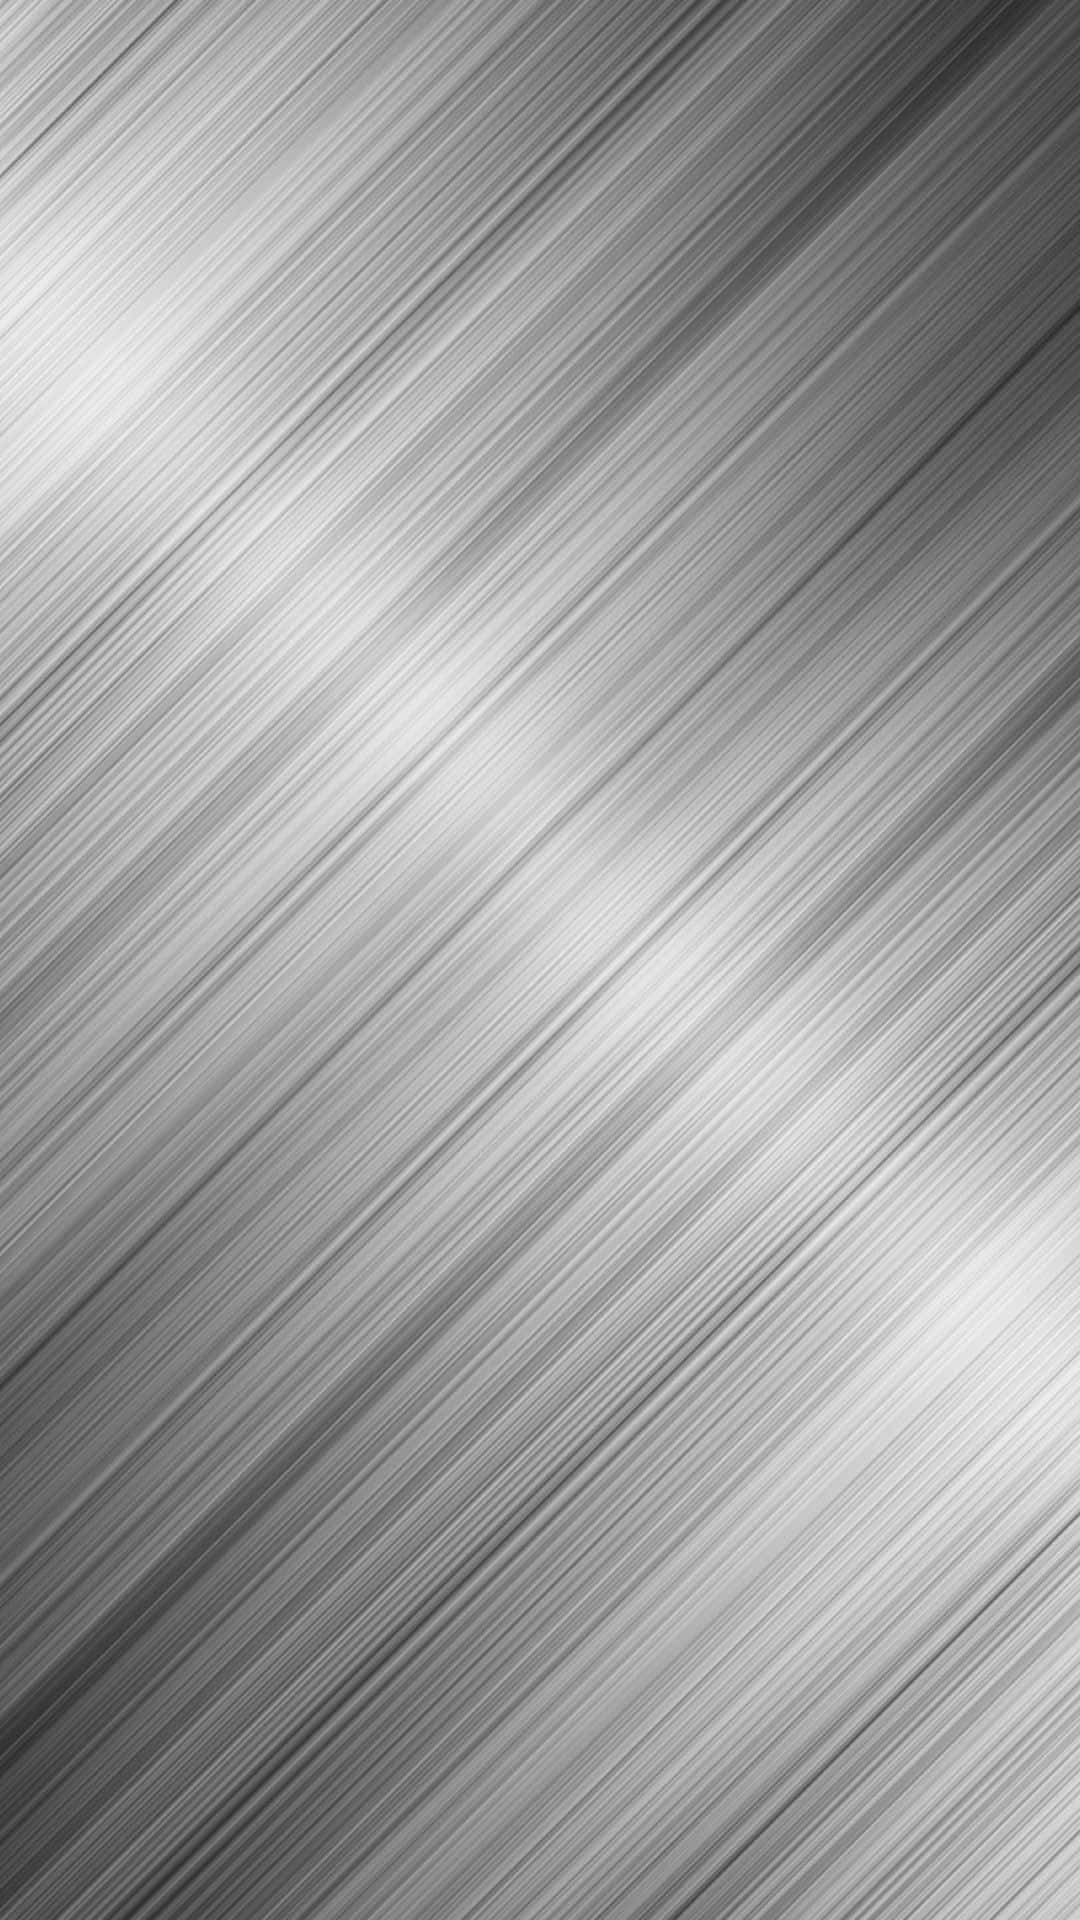 A diagonal brush metal texture - Silver